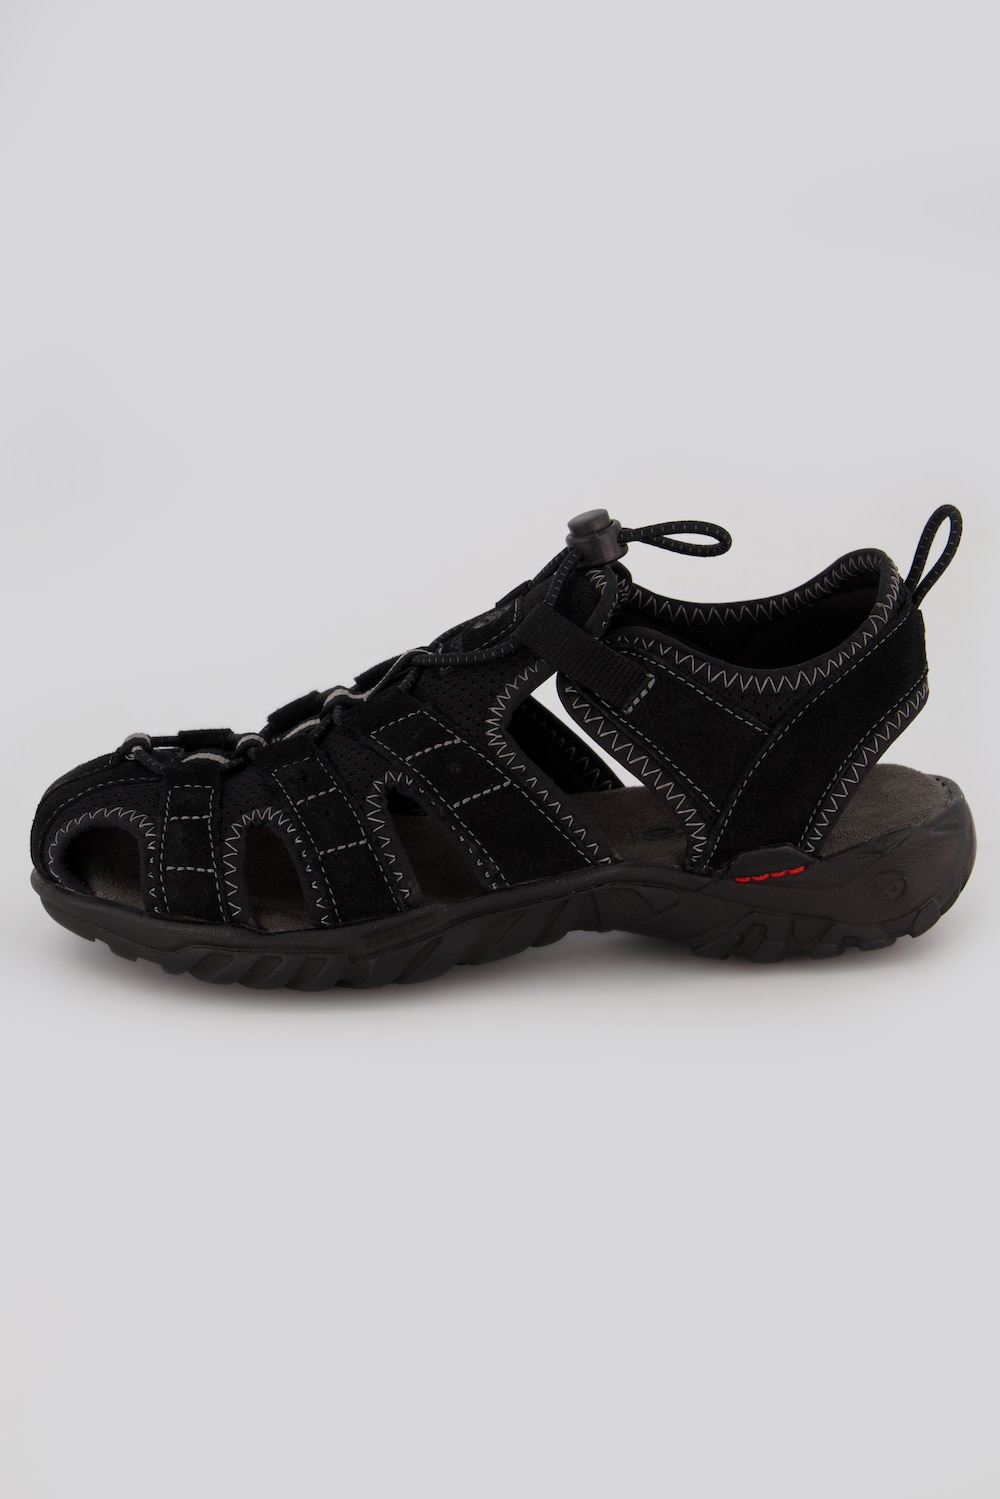 Herren-Sandale, Große Größen, Herren, schwarz, Größe: 44, Leder, JP1880 product